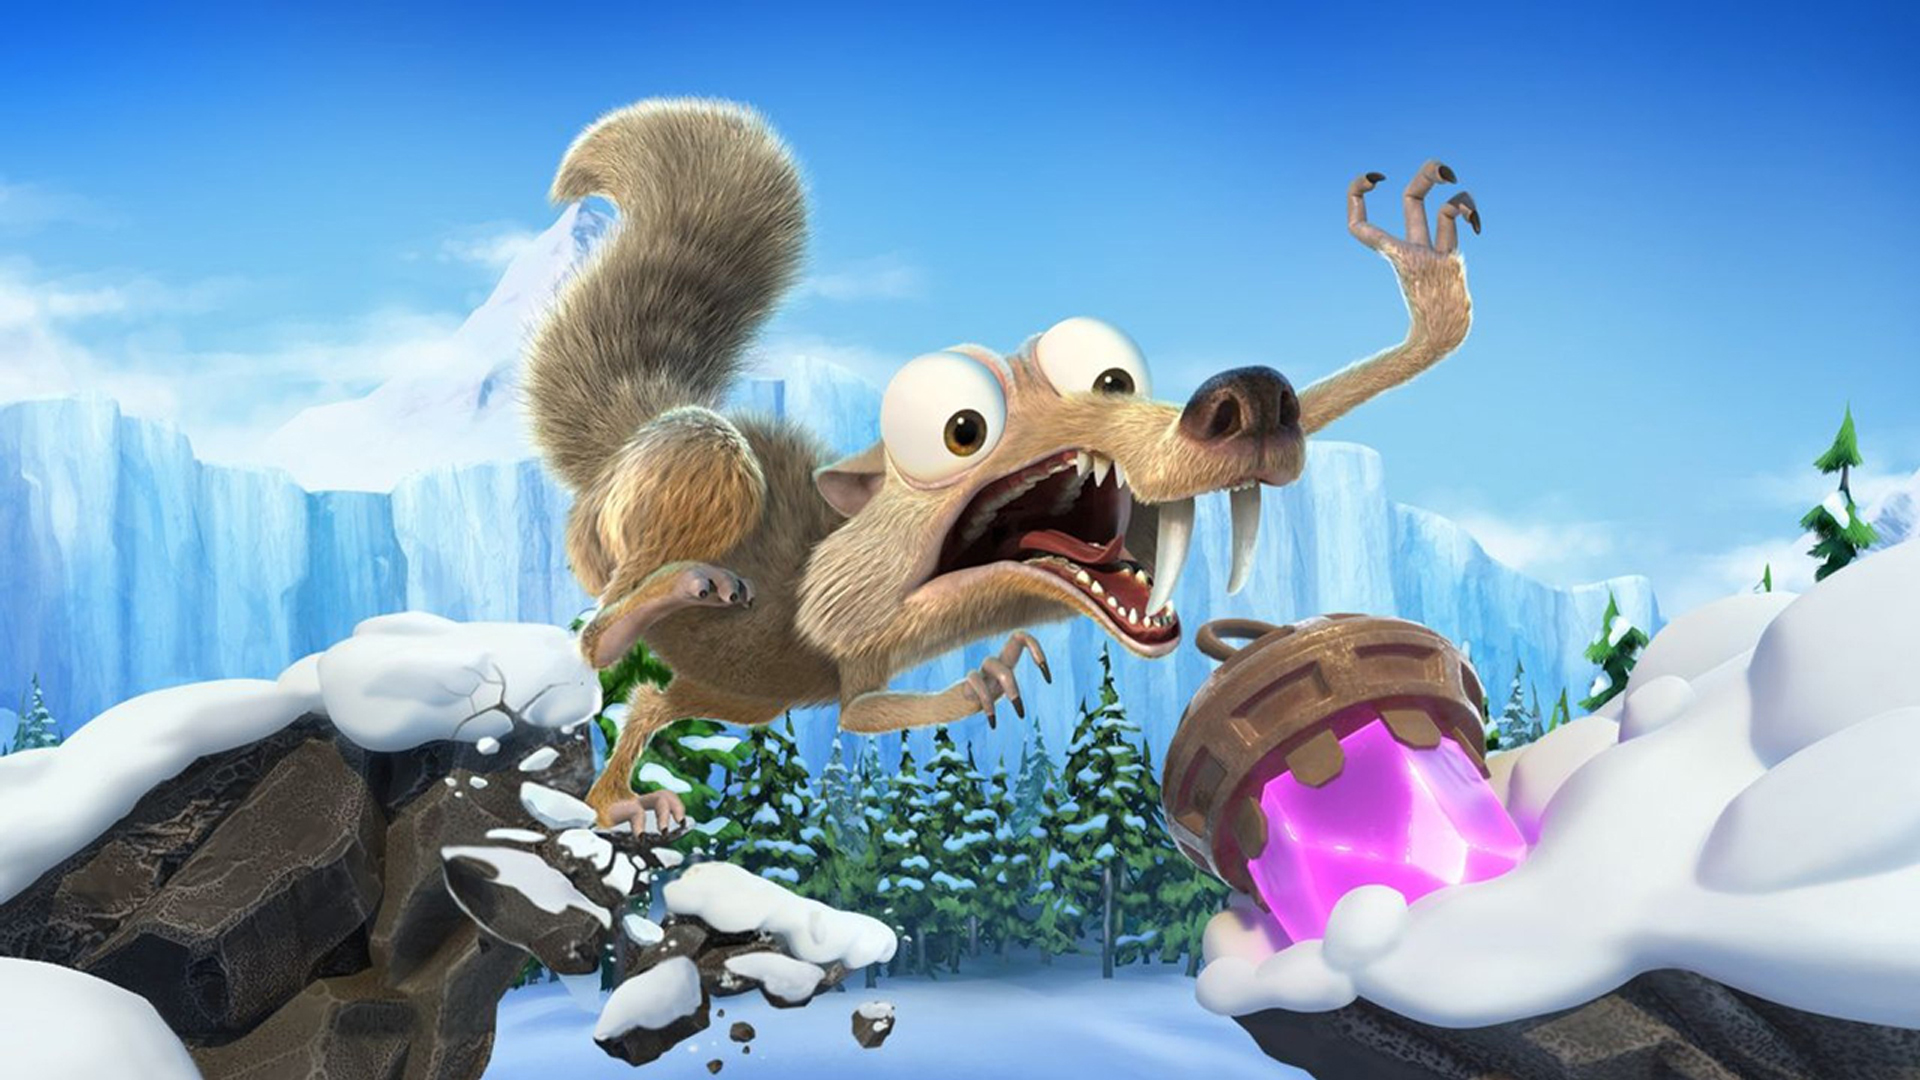 ice age: scrat nutty adventure